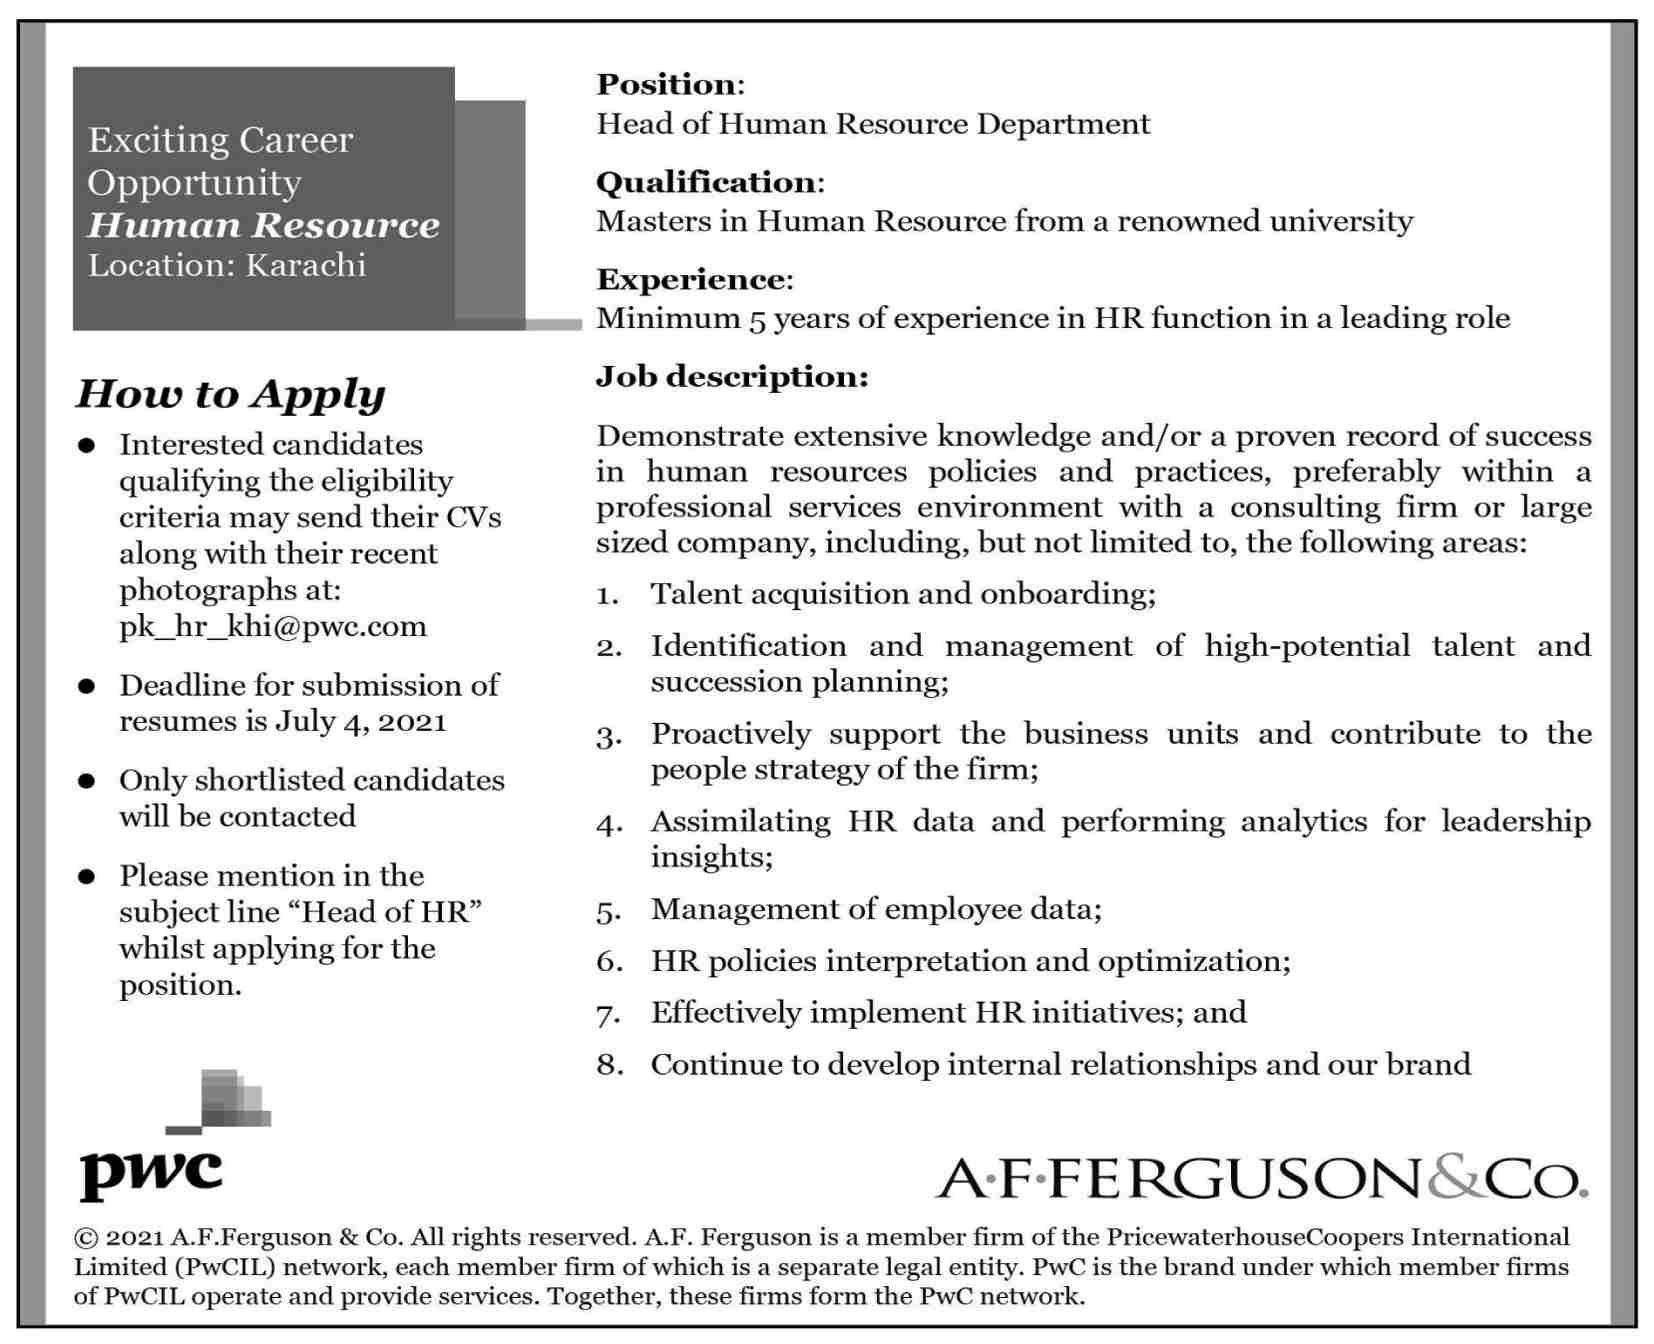 Head Of Human Resource Department Jobs in A F Ferguson & Company Karachi 2021